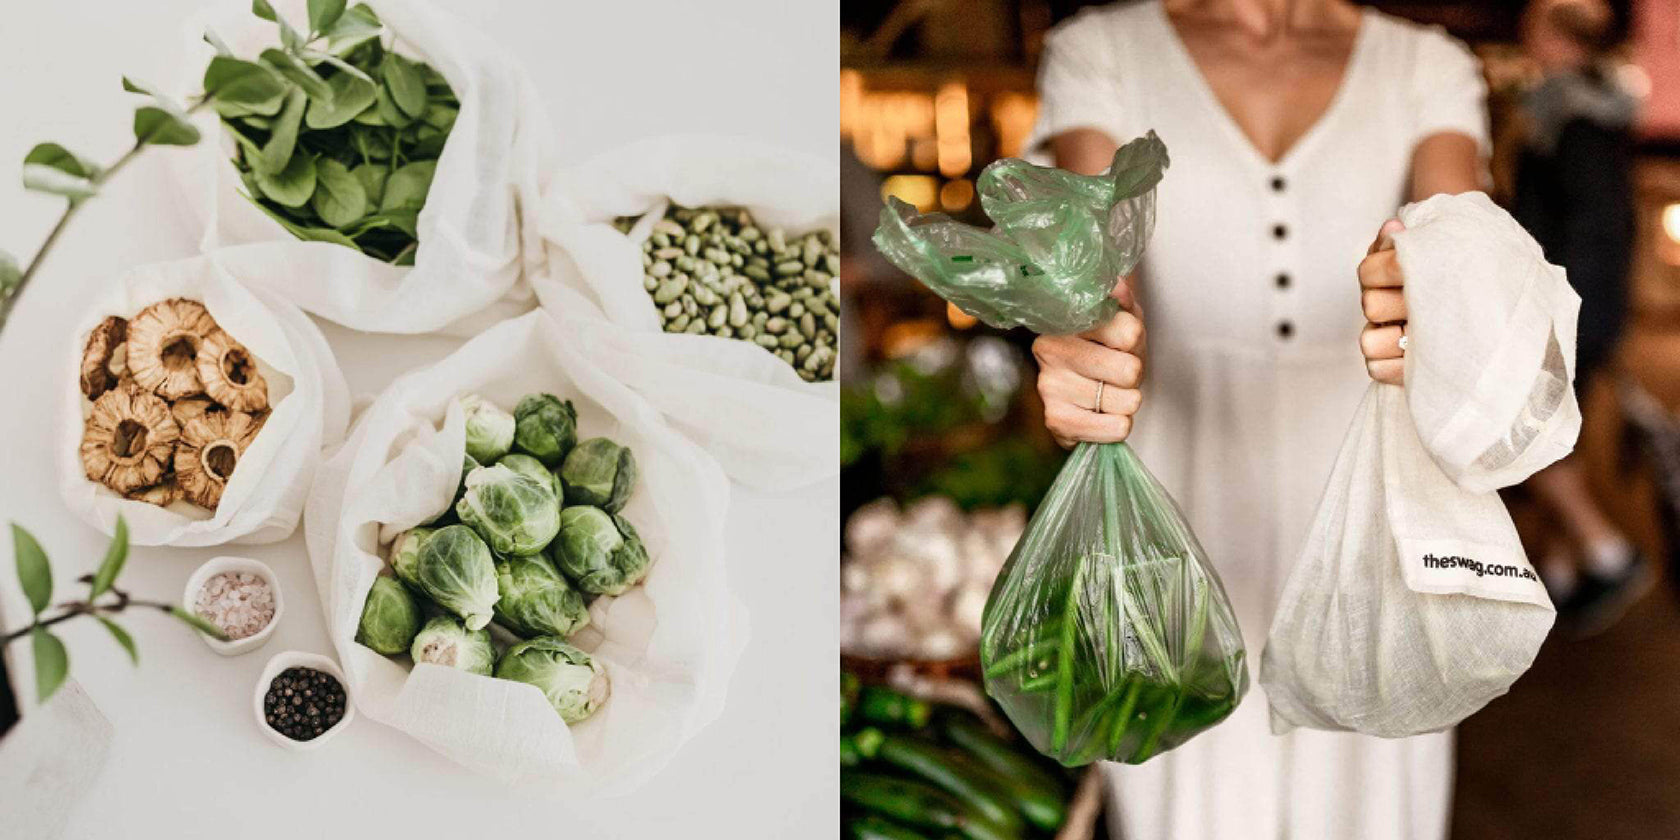 planet-saving reusable produce bags